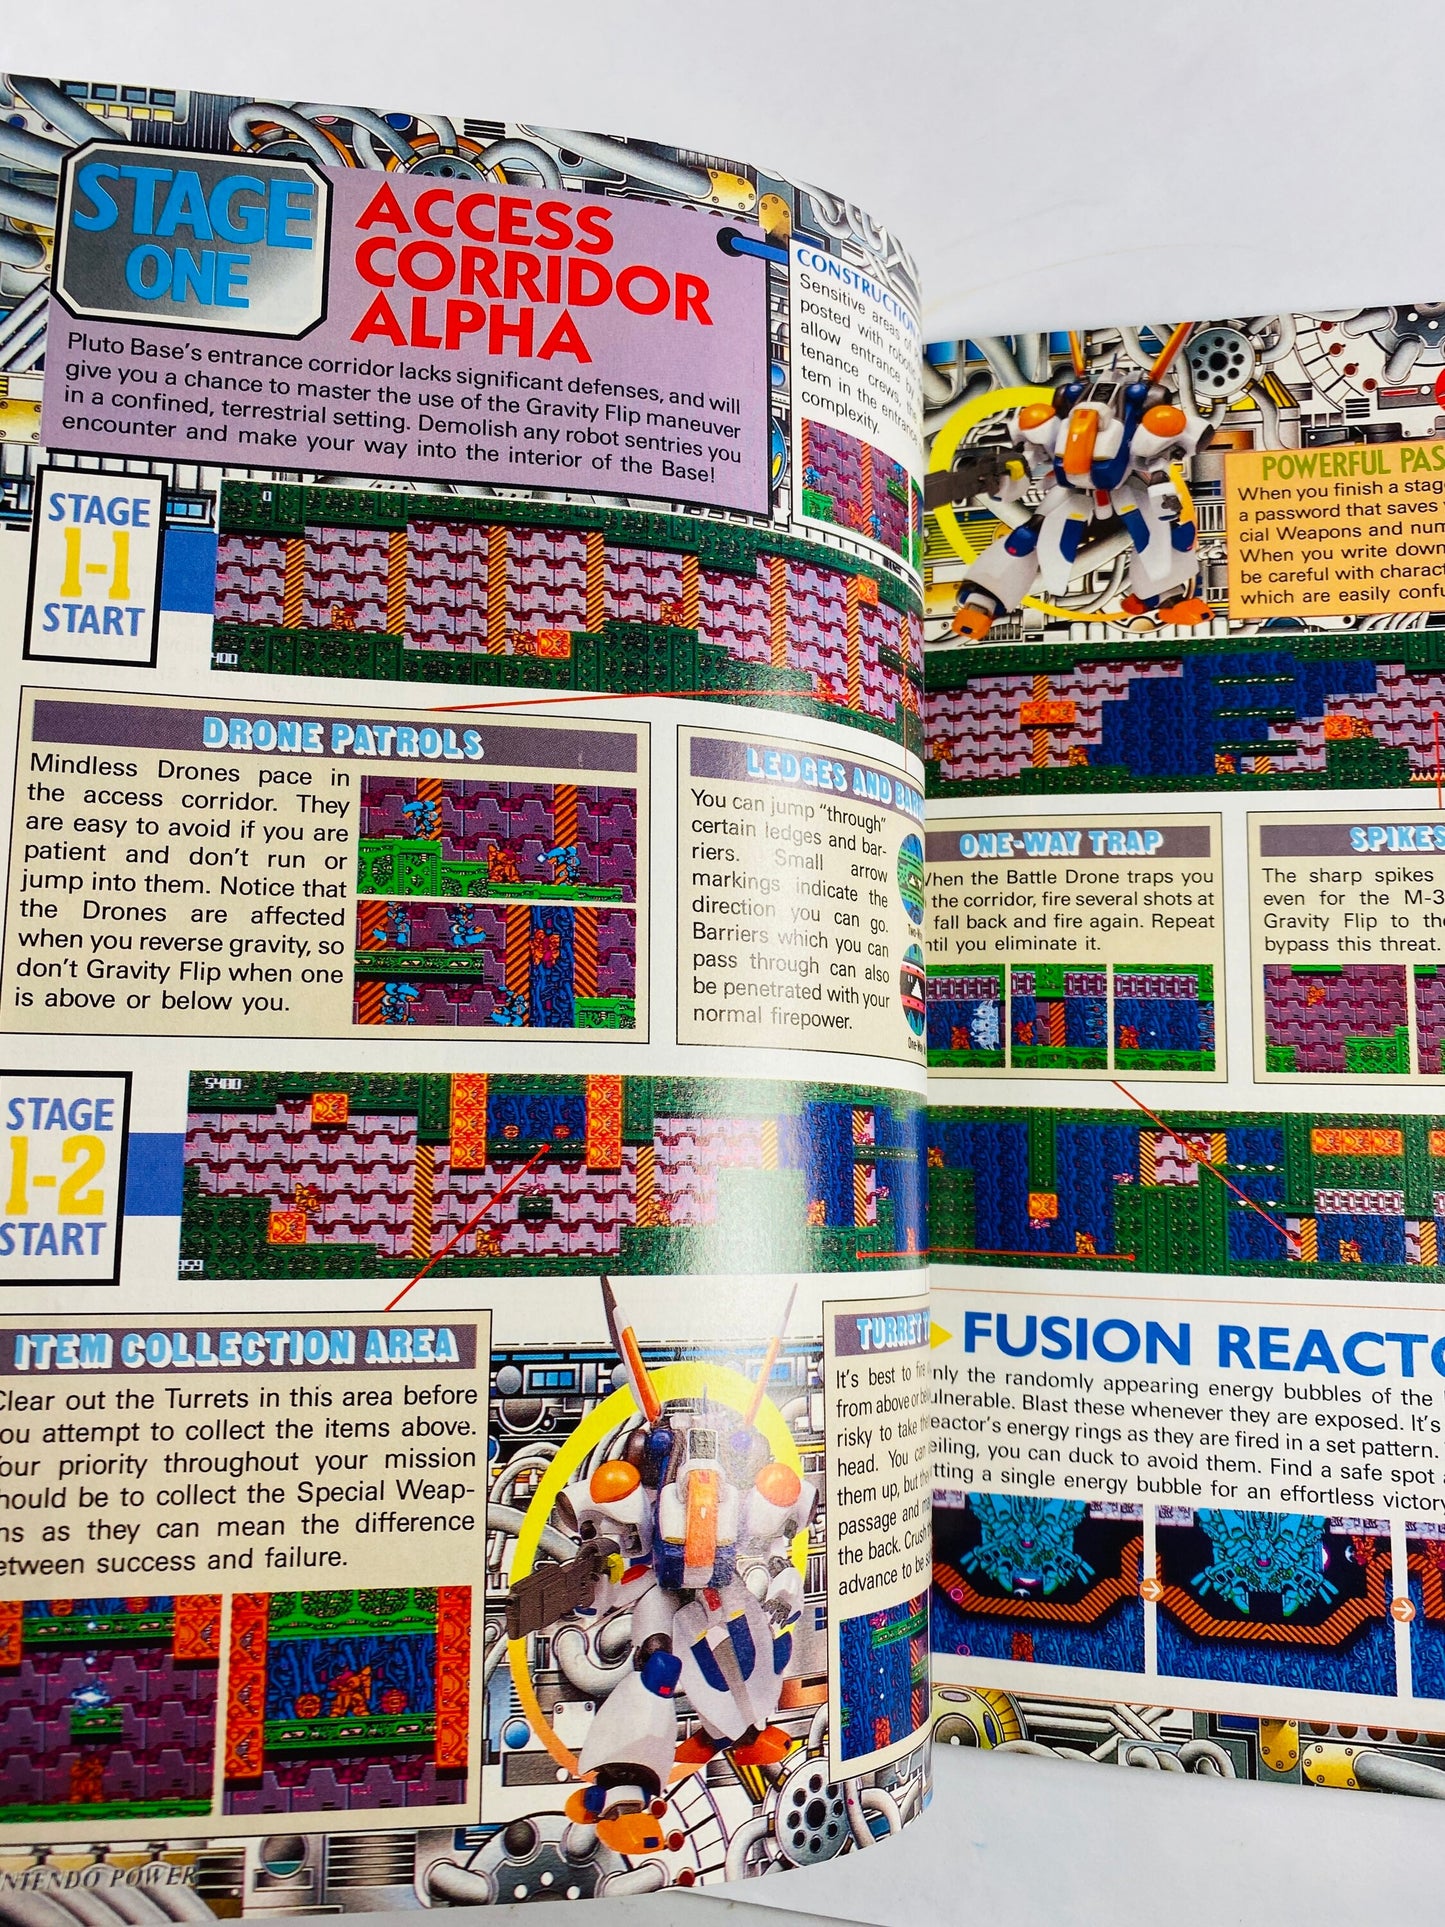 1990 Vintage Nintendo Power magazine featuring video game & Gameboy strategies